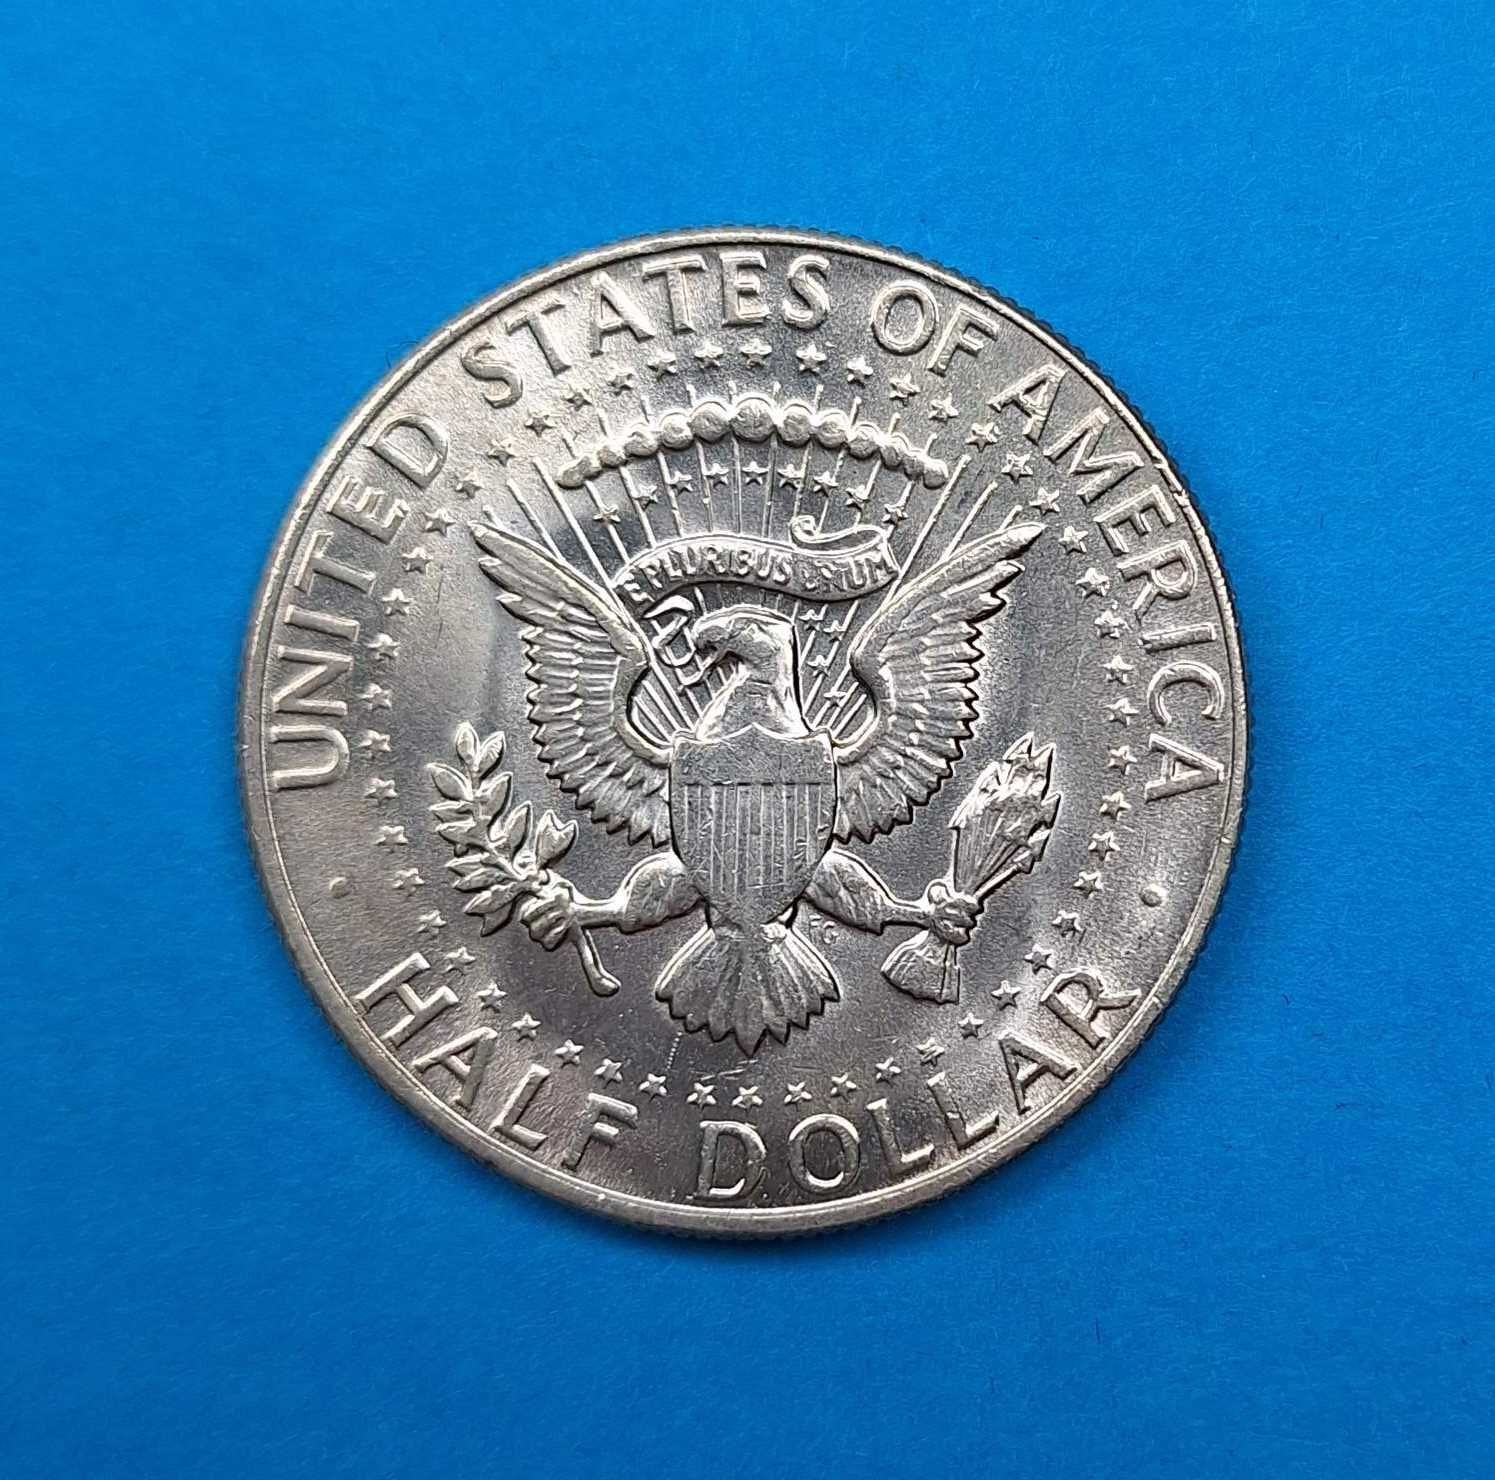 USA Dolar półdolarówka J. Kennedy rok 1968, bdb stan, srebro 0,400